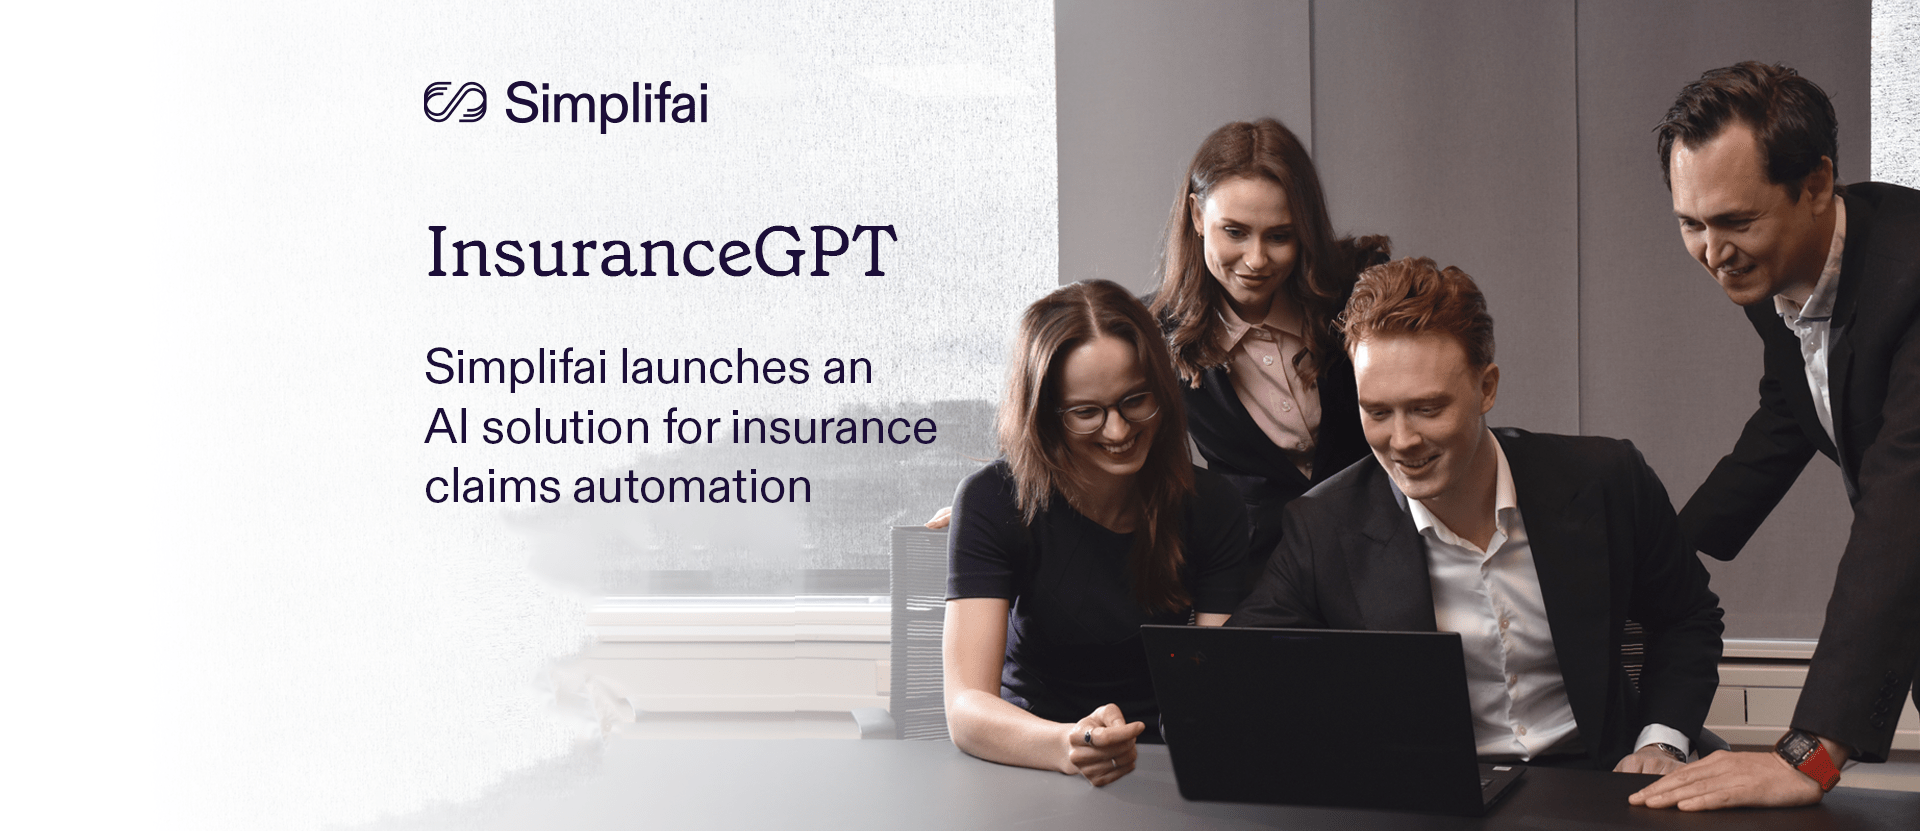 Insurance GPT